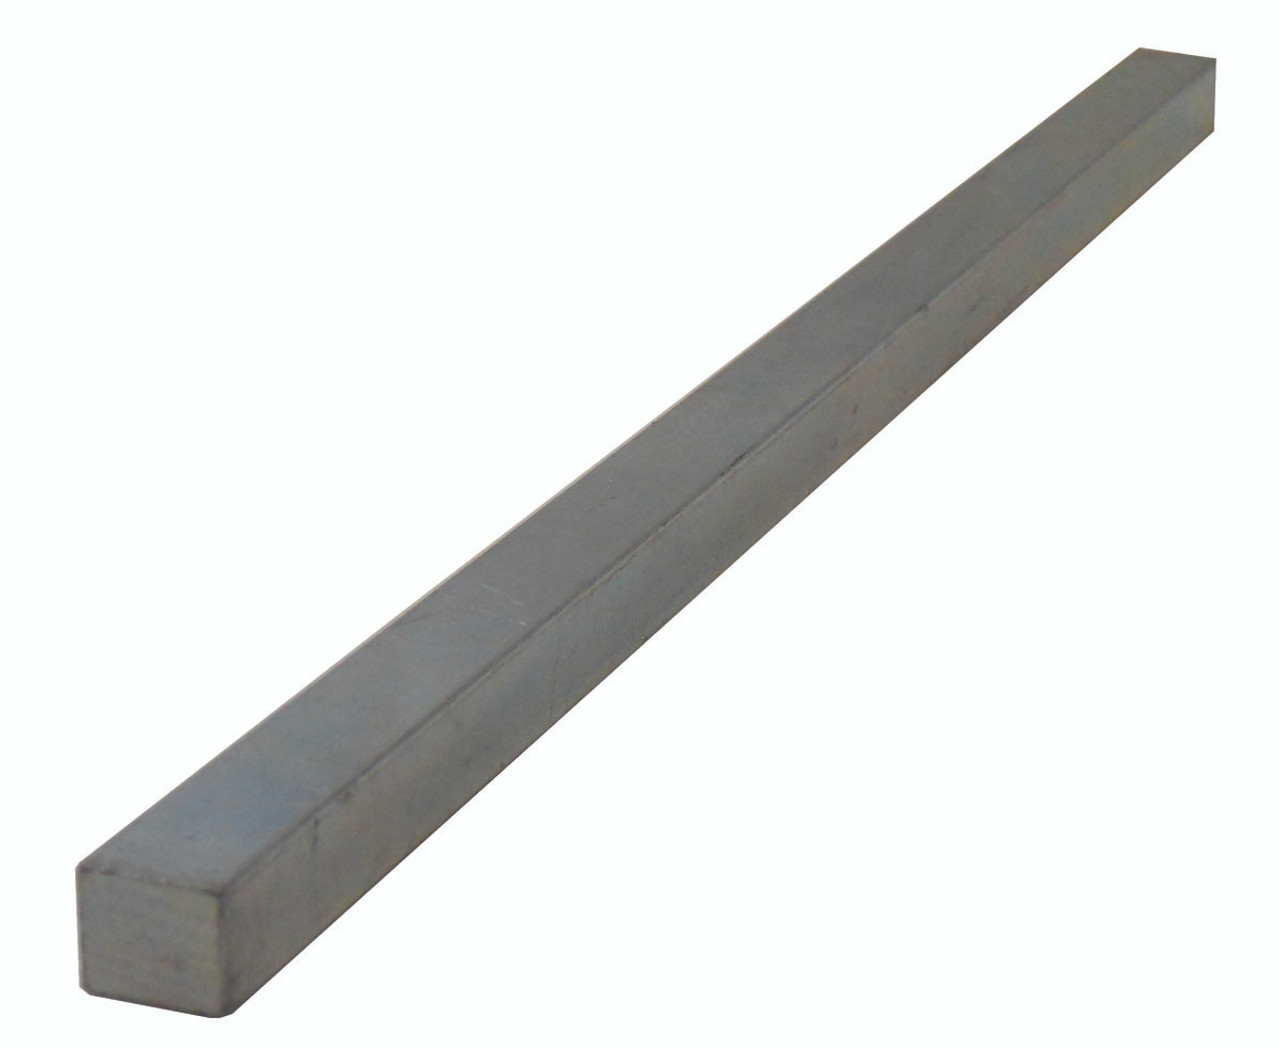 Rectangular SAE 5/8 x 1-1/4 x 12" Zinc Plated Steel Keystock  .625-1250-12